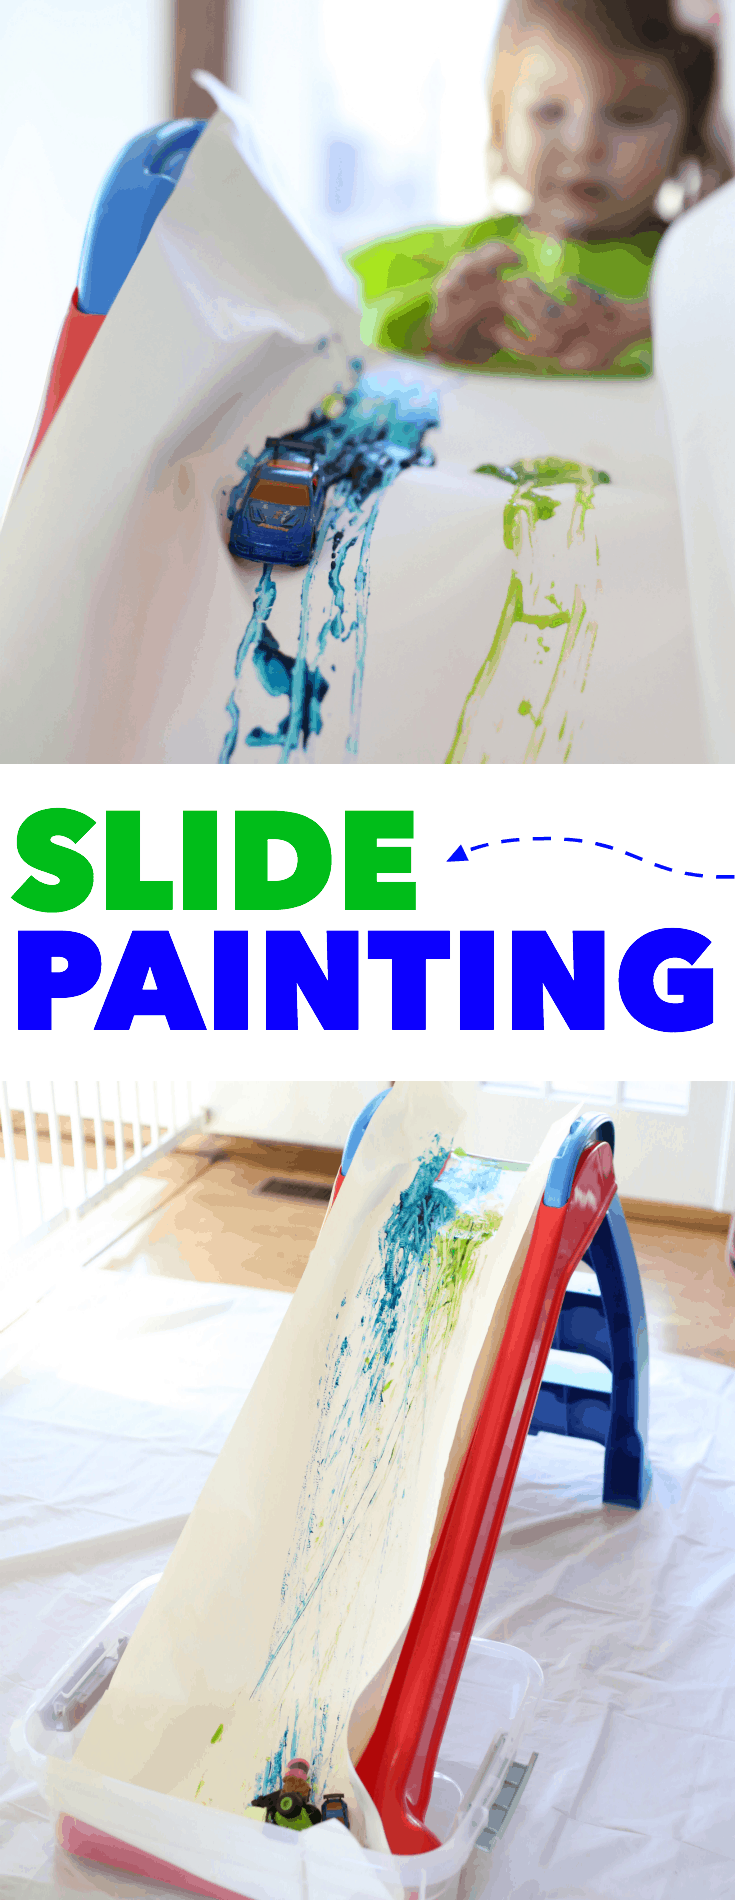 Slide Painting